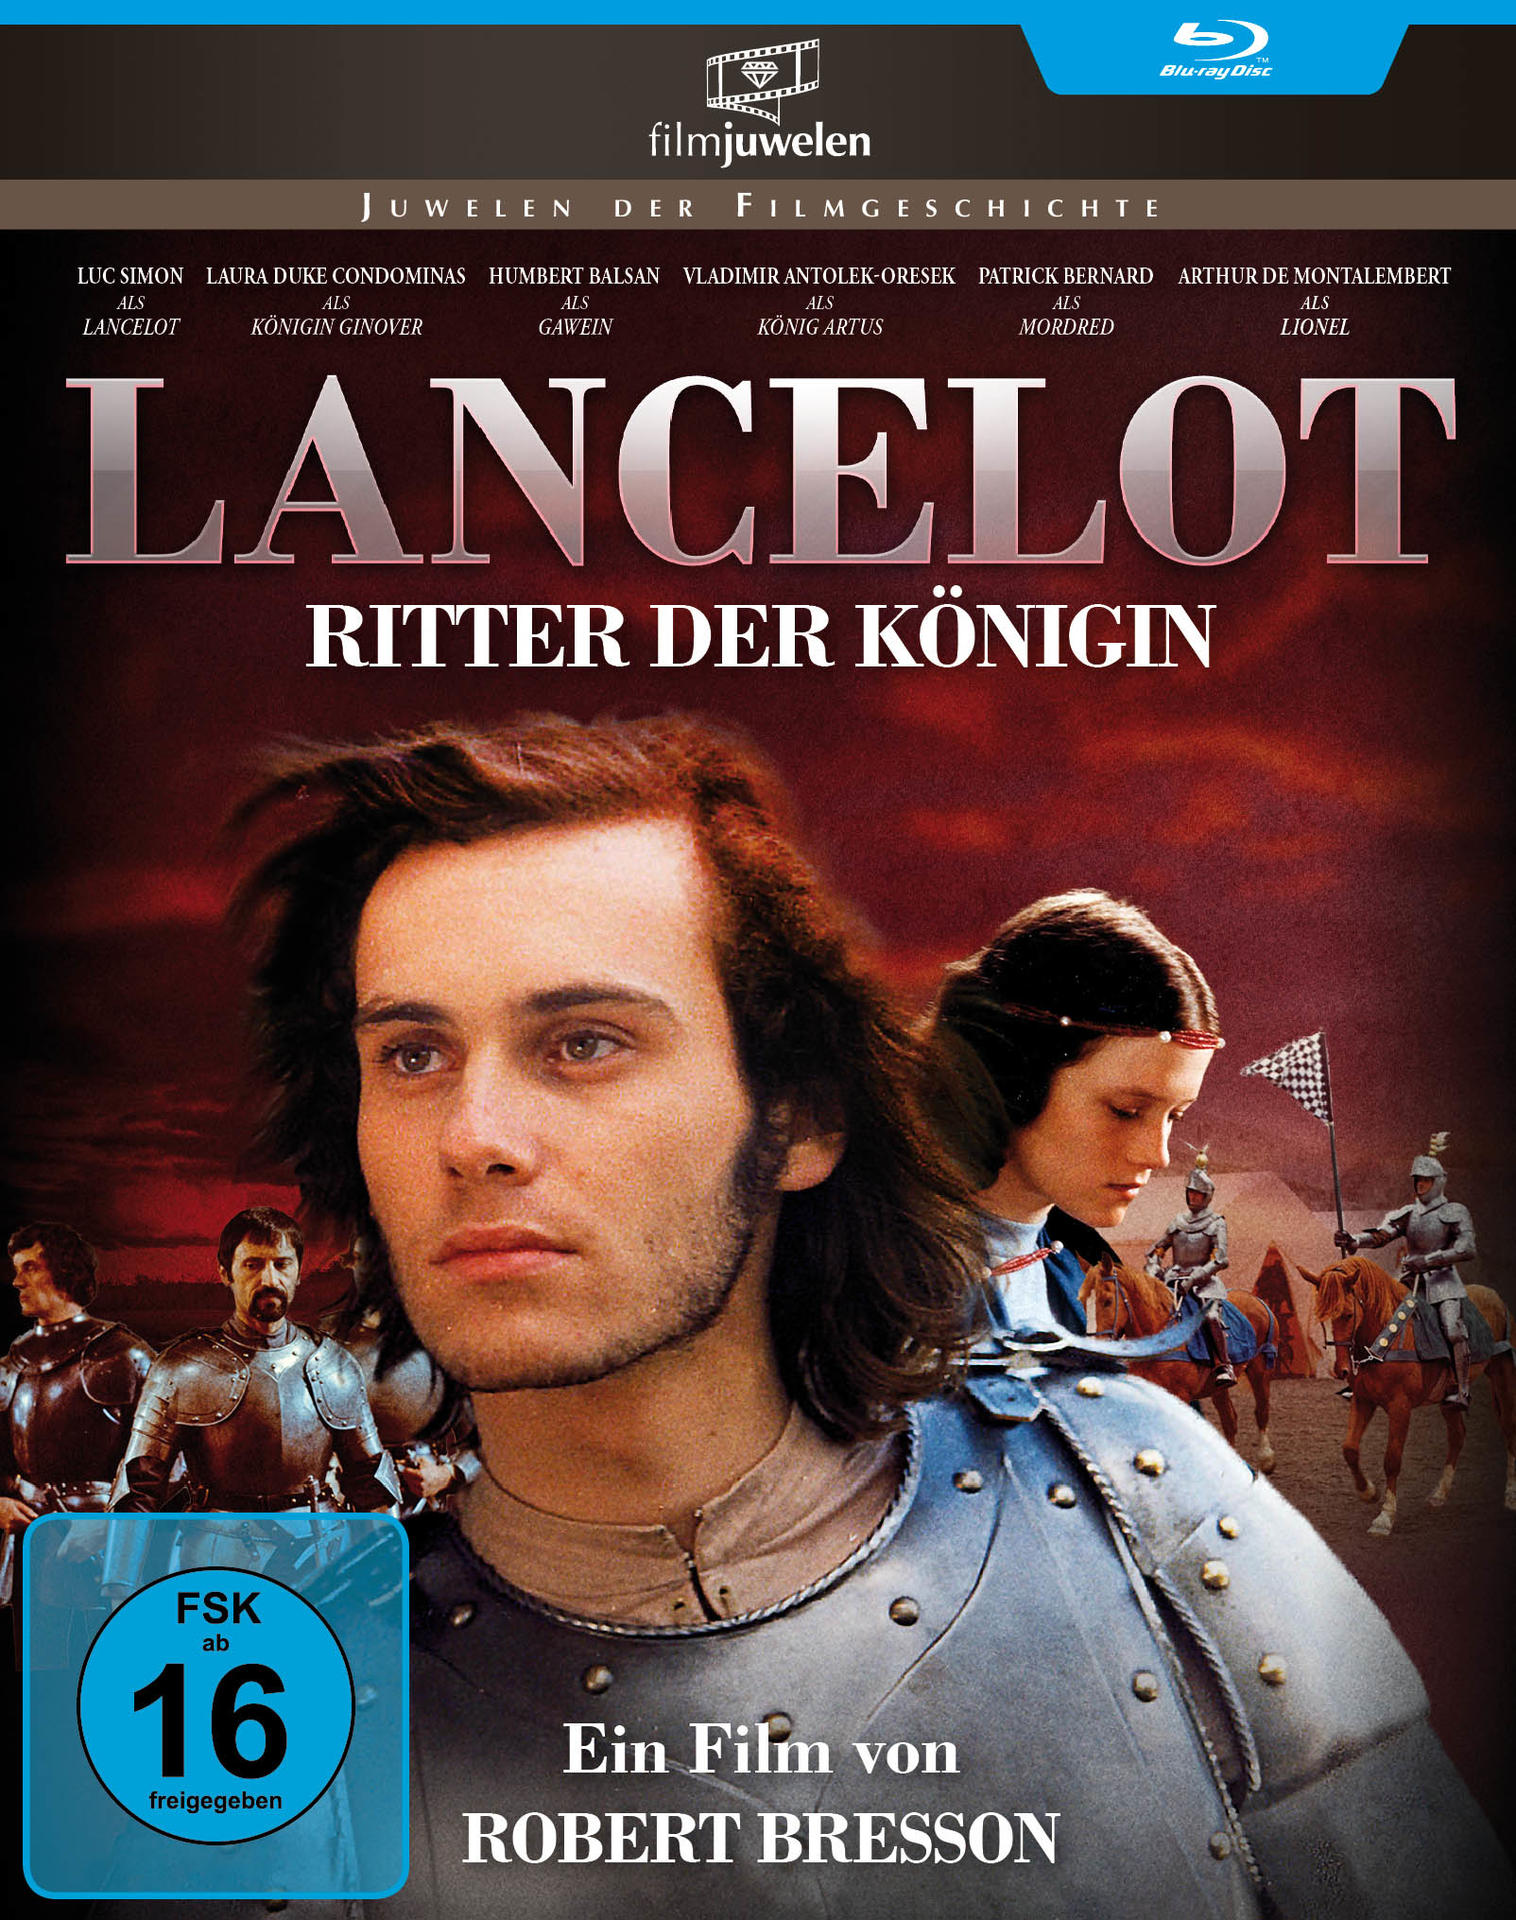 der Lancelot, Ritter Königin Blu-ray